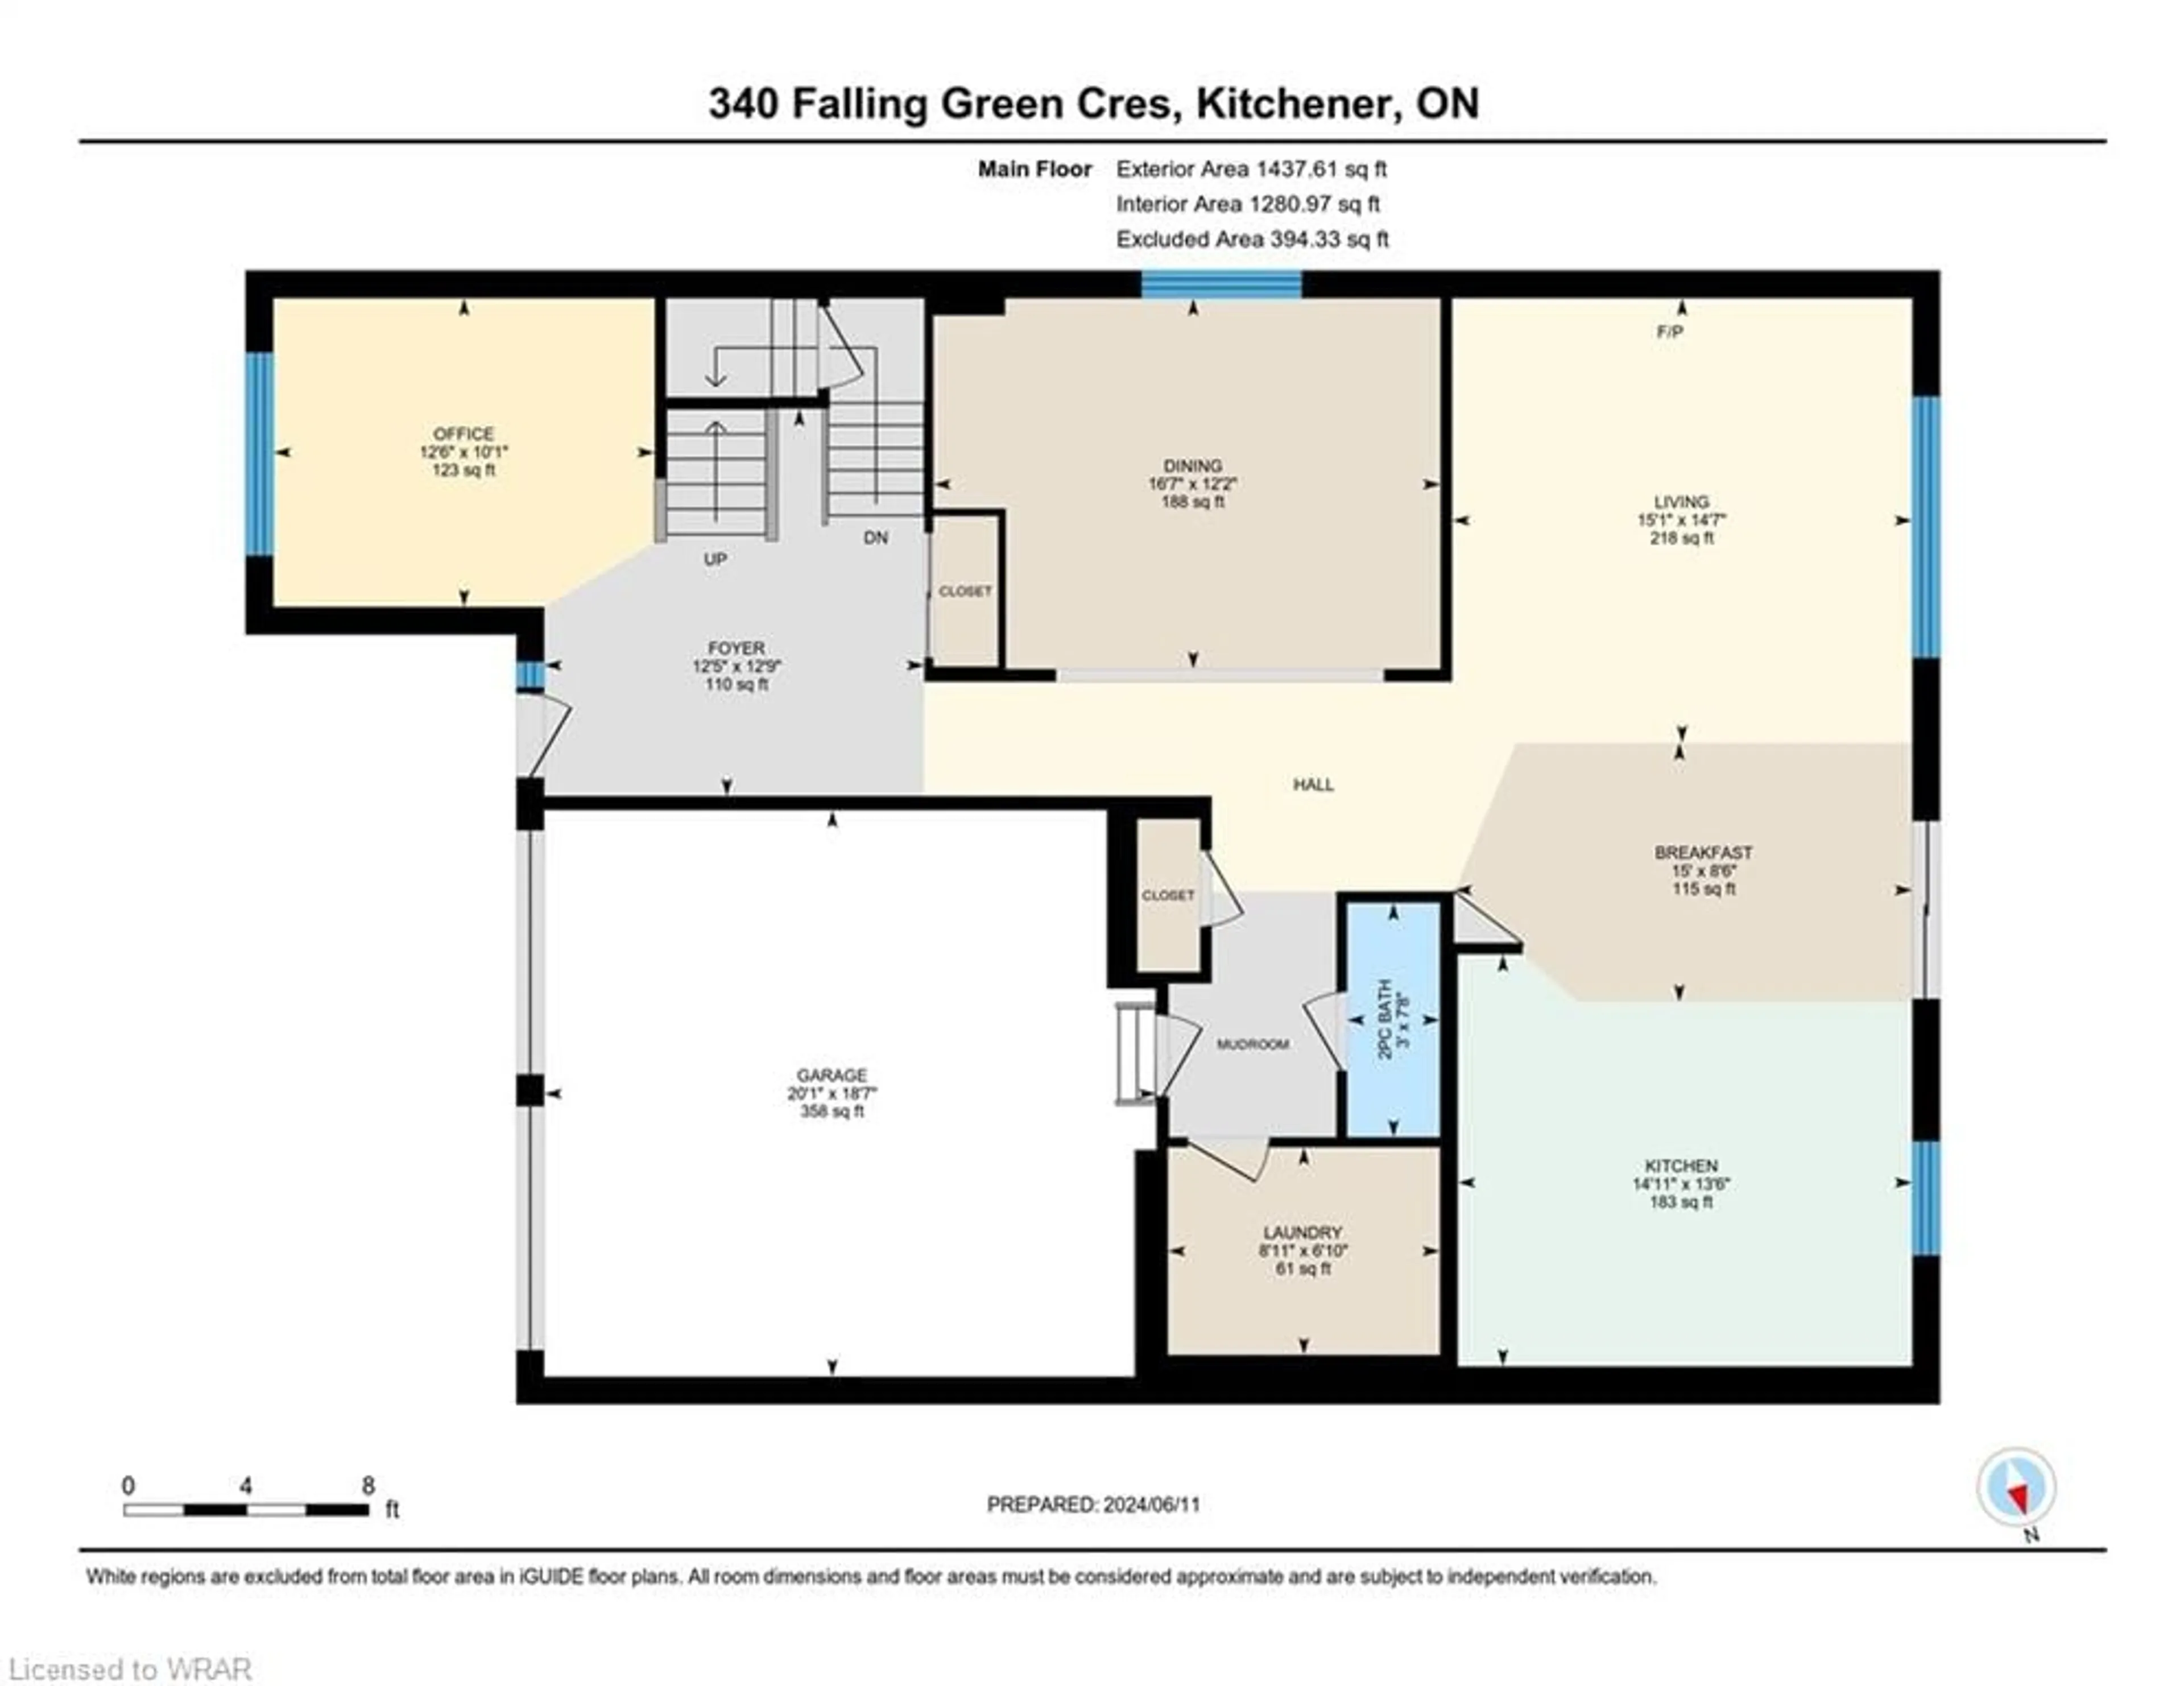 Floor plan for 340 Falling Green Cres, Kitchener Ontario N2R 0G4